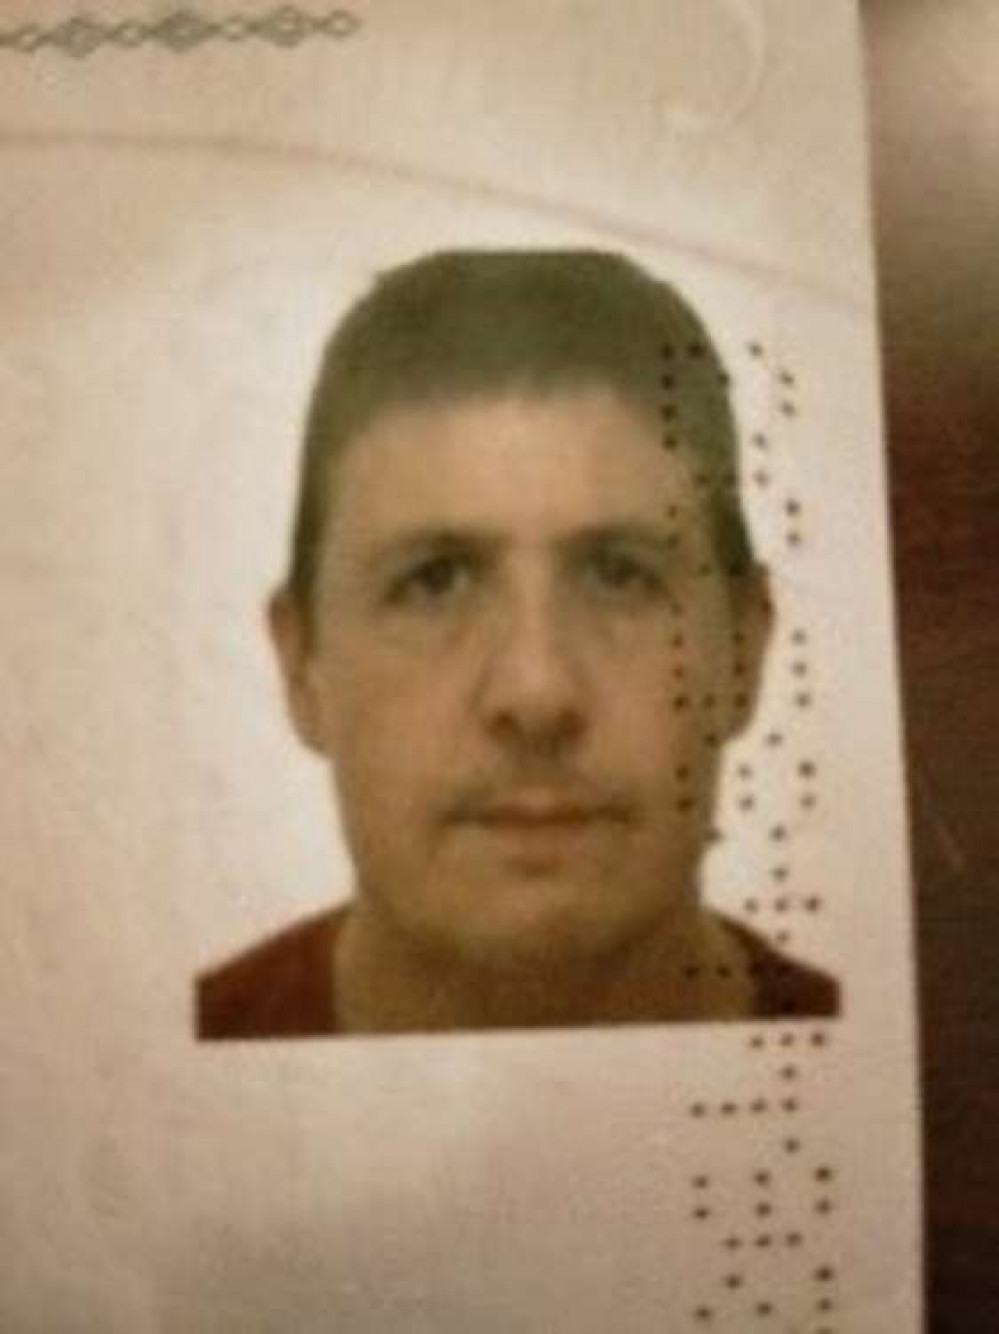 David was last seen on September 19. (Image: Hounslow Police)